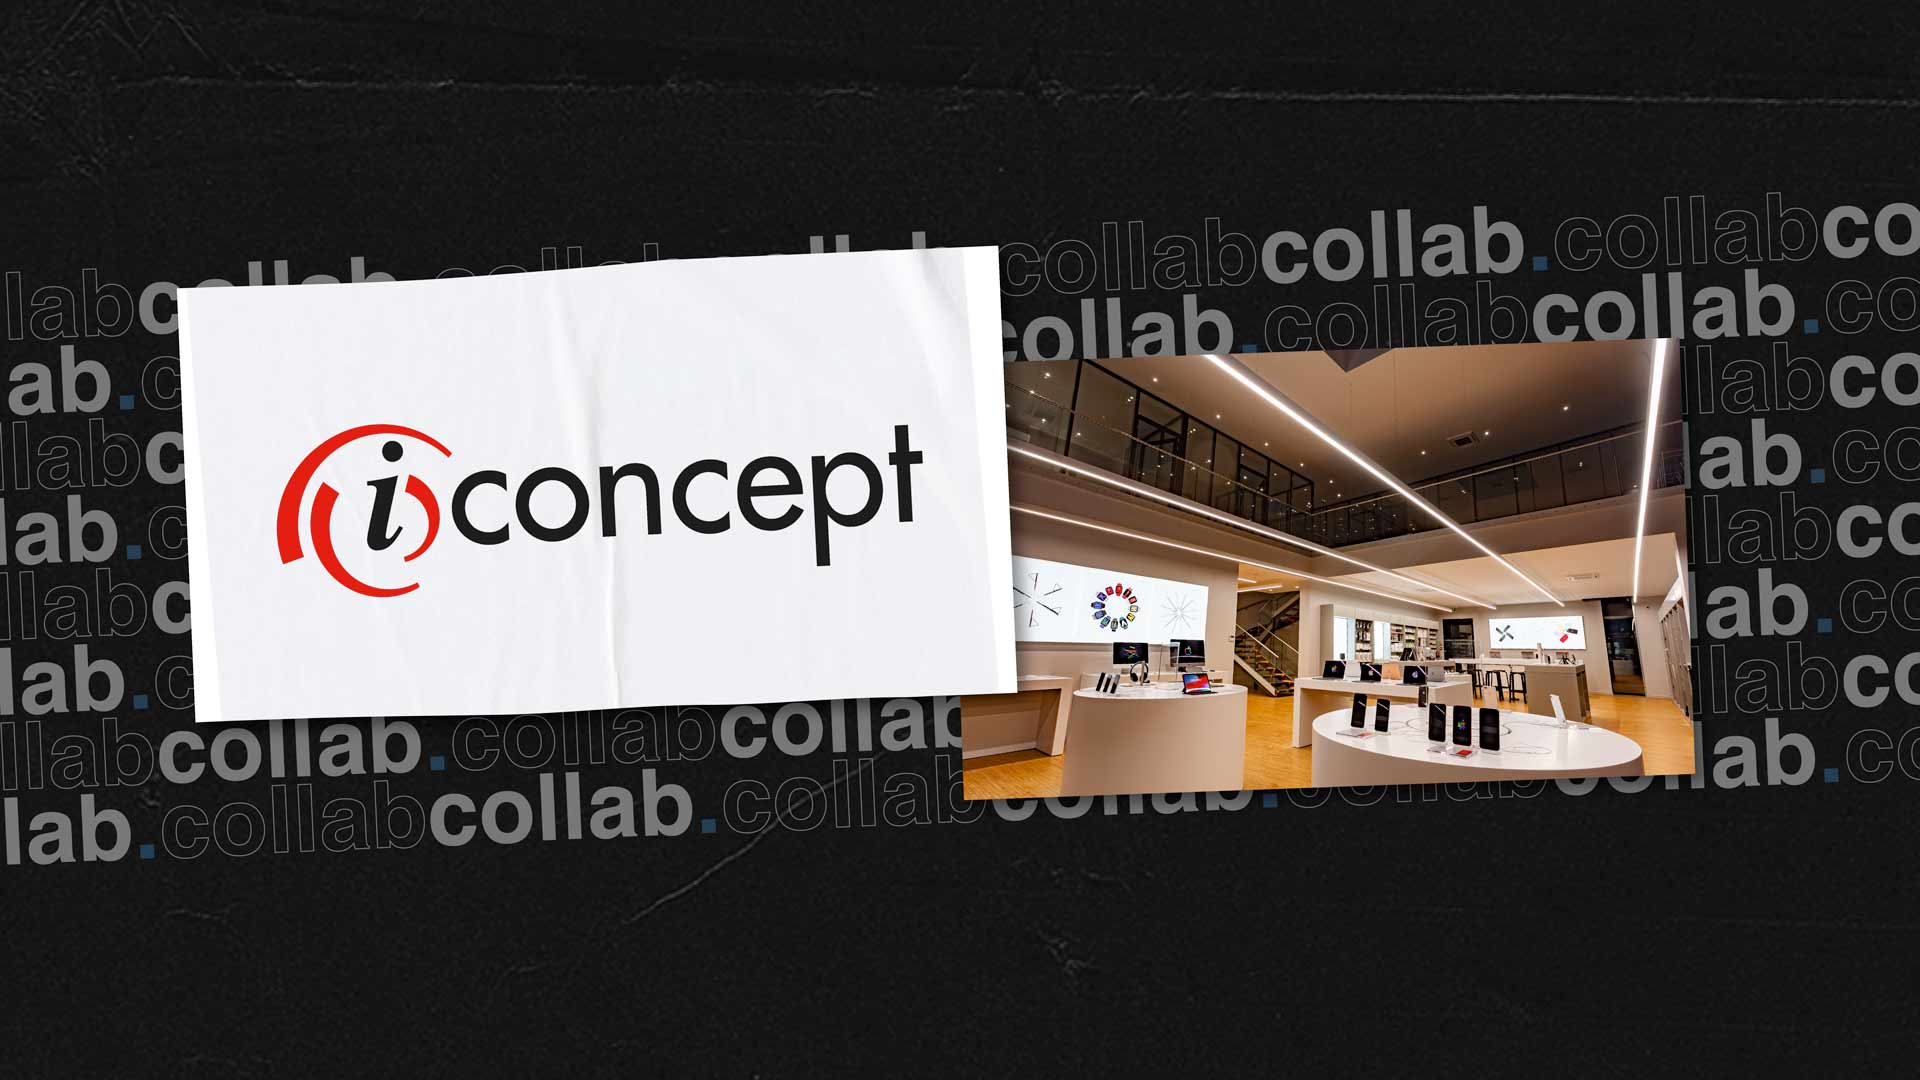 collaboration iconcept